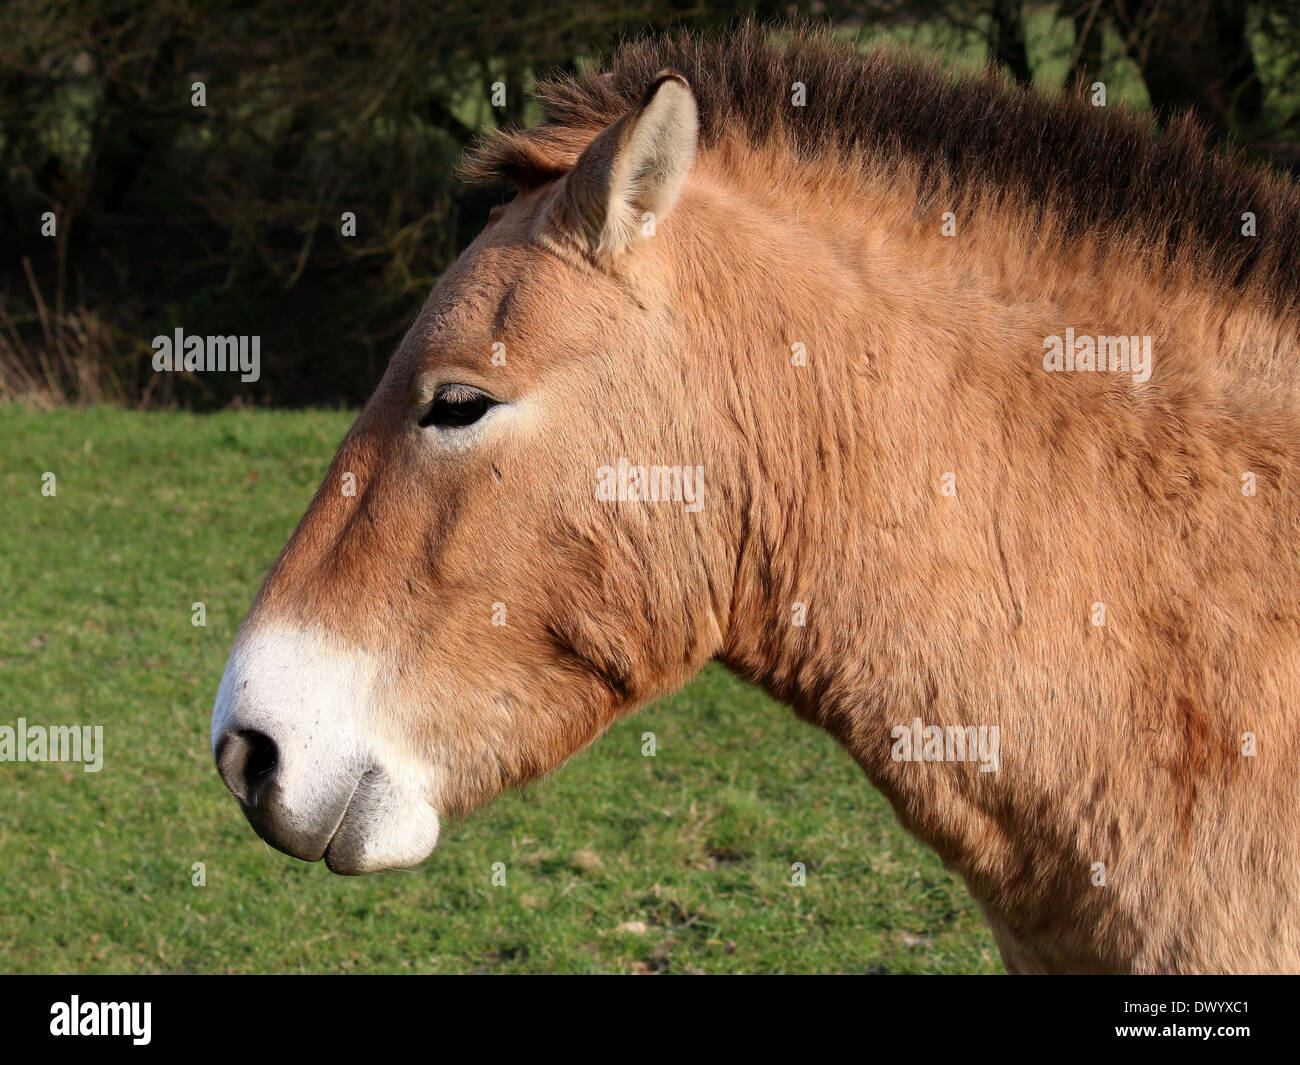 Caballos mongoles de Przewalski (Equus ferus przewalskii), primer plano de la cabeza, visto de perfil Foto de stock